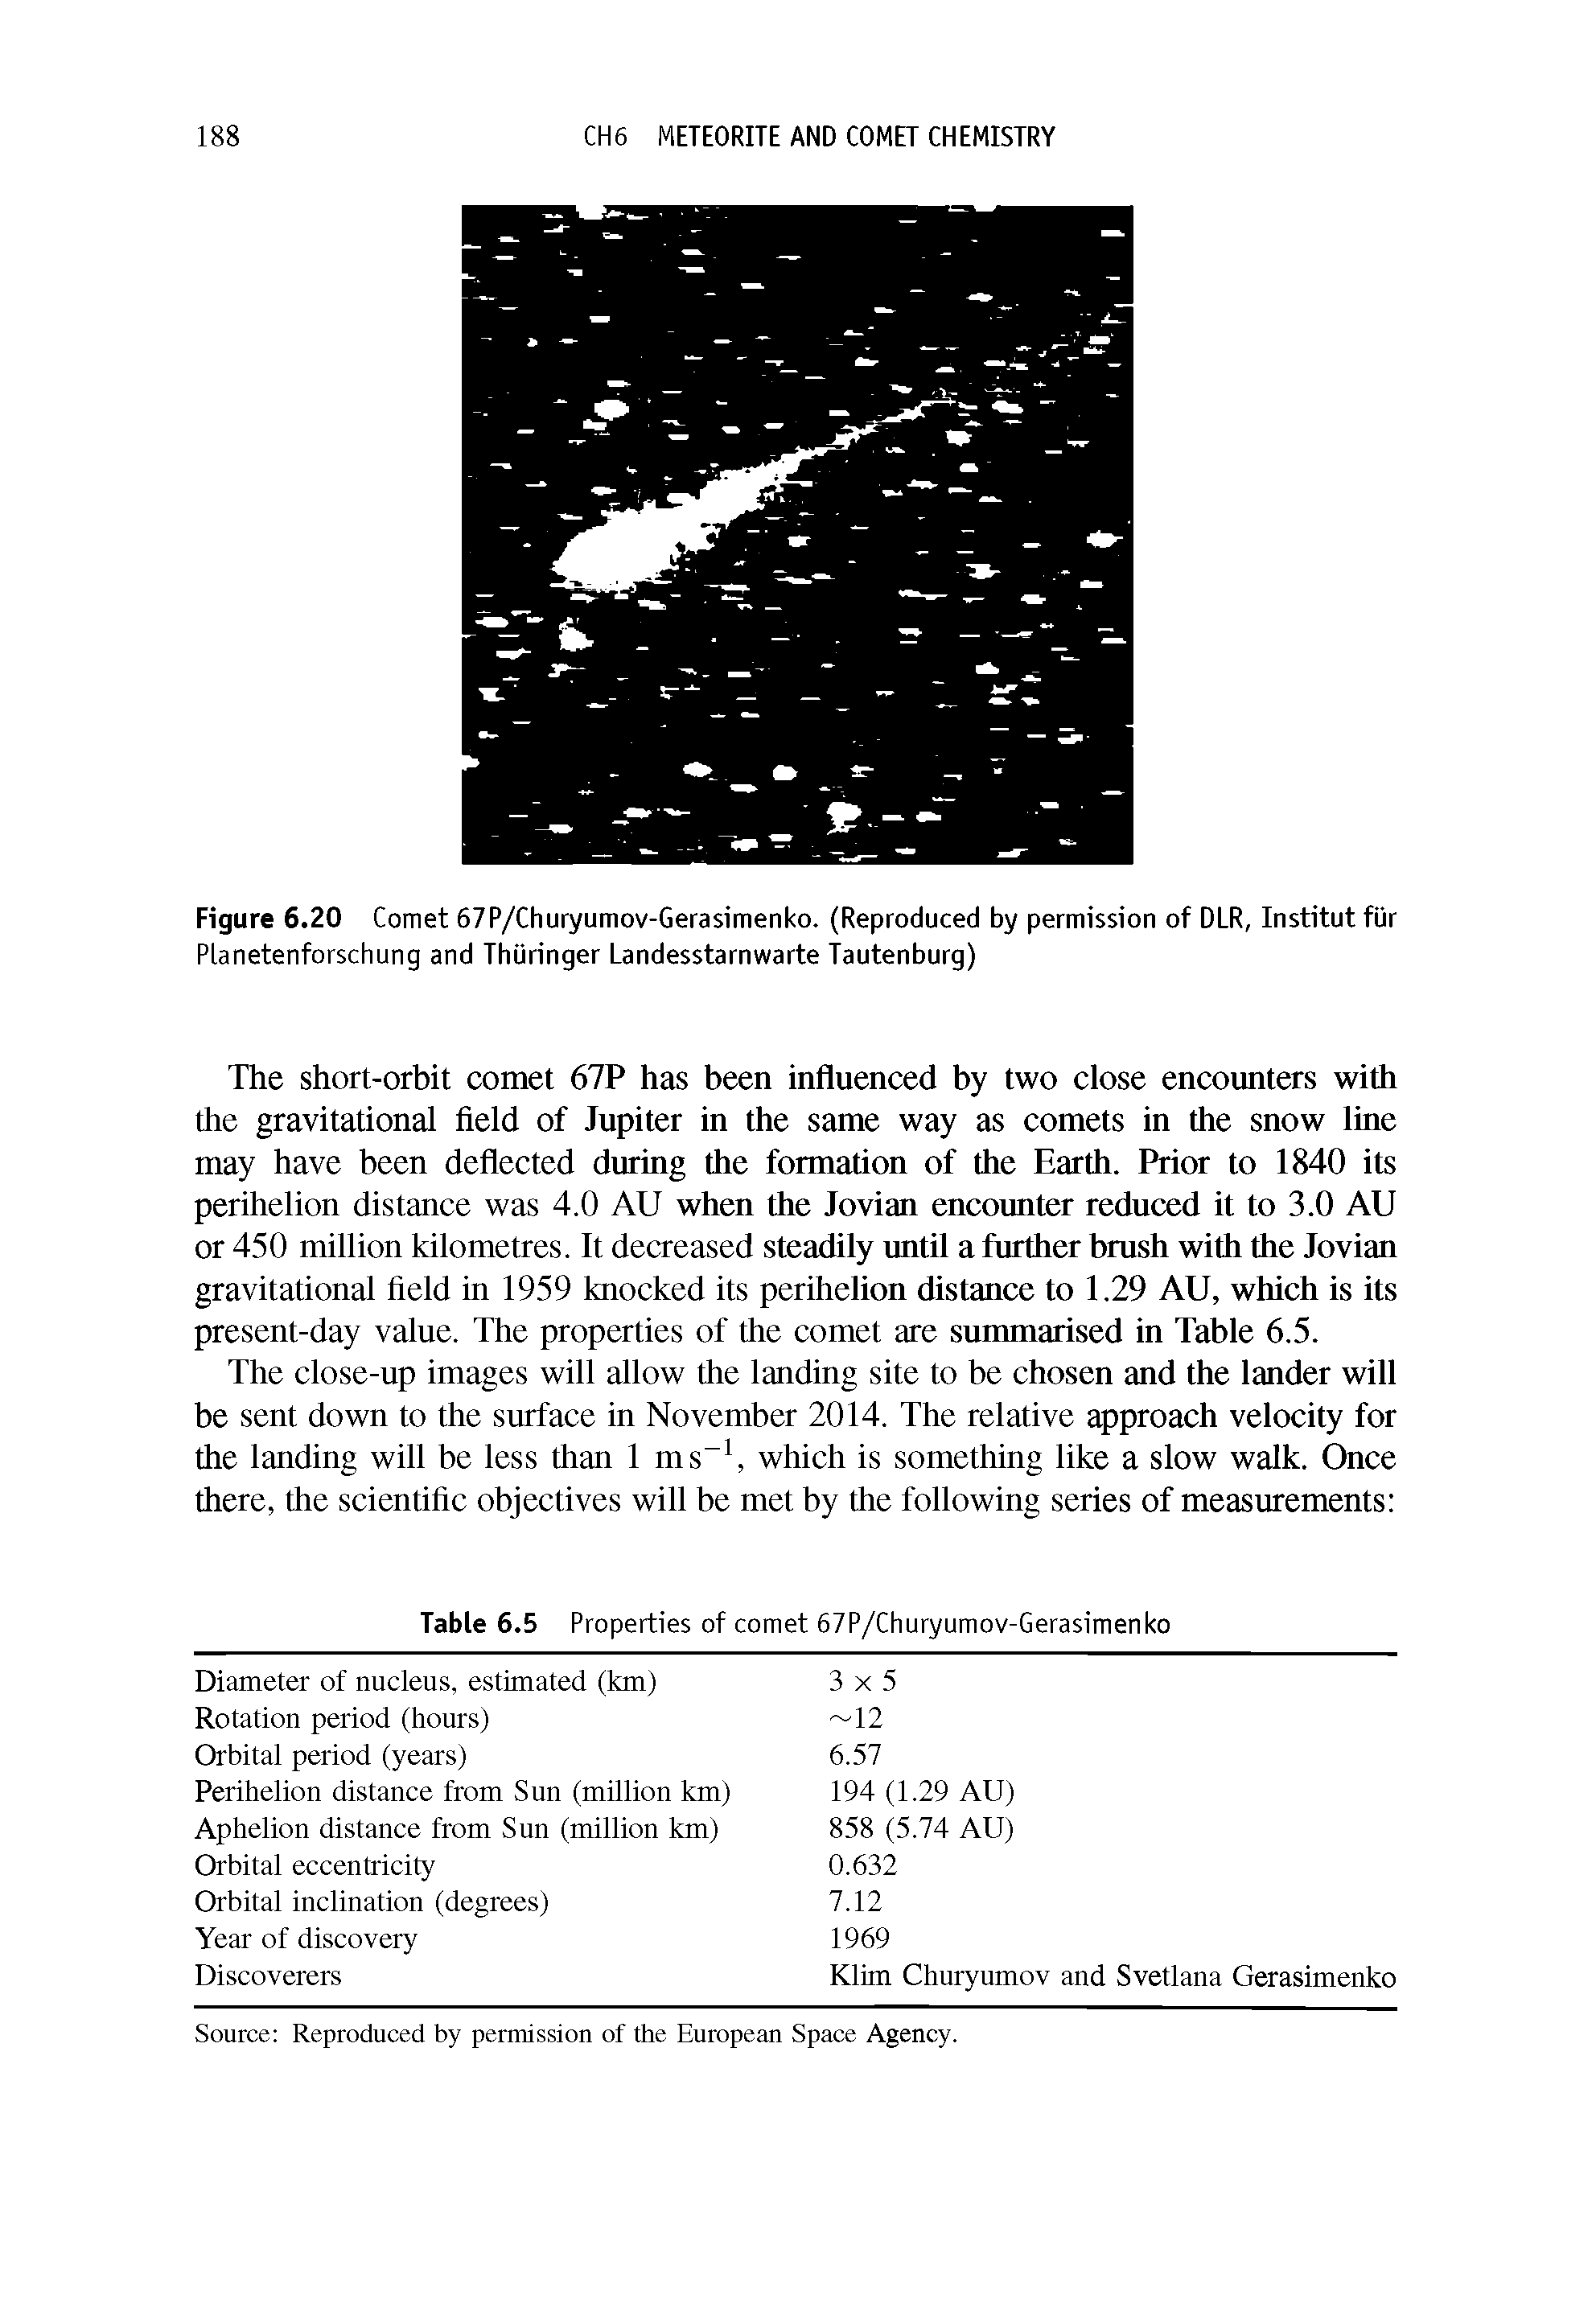 Figure 6.20 Comet 67P/Churyumov-Gerasimenko. (Reproduced by permission of DLR, Institut fur Planetenforschung and Thuringer Landesstarnwarte Tautenburg)...